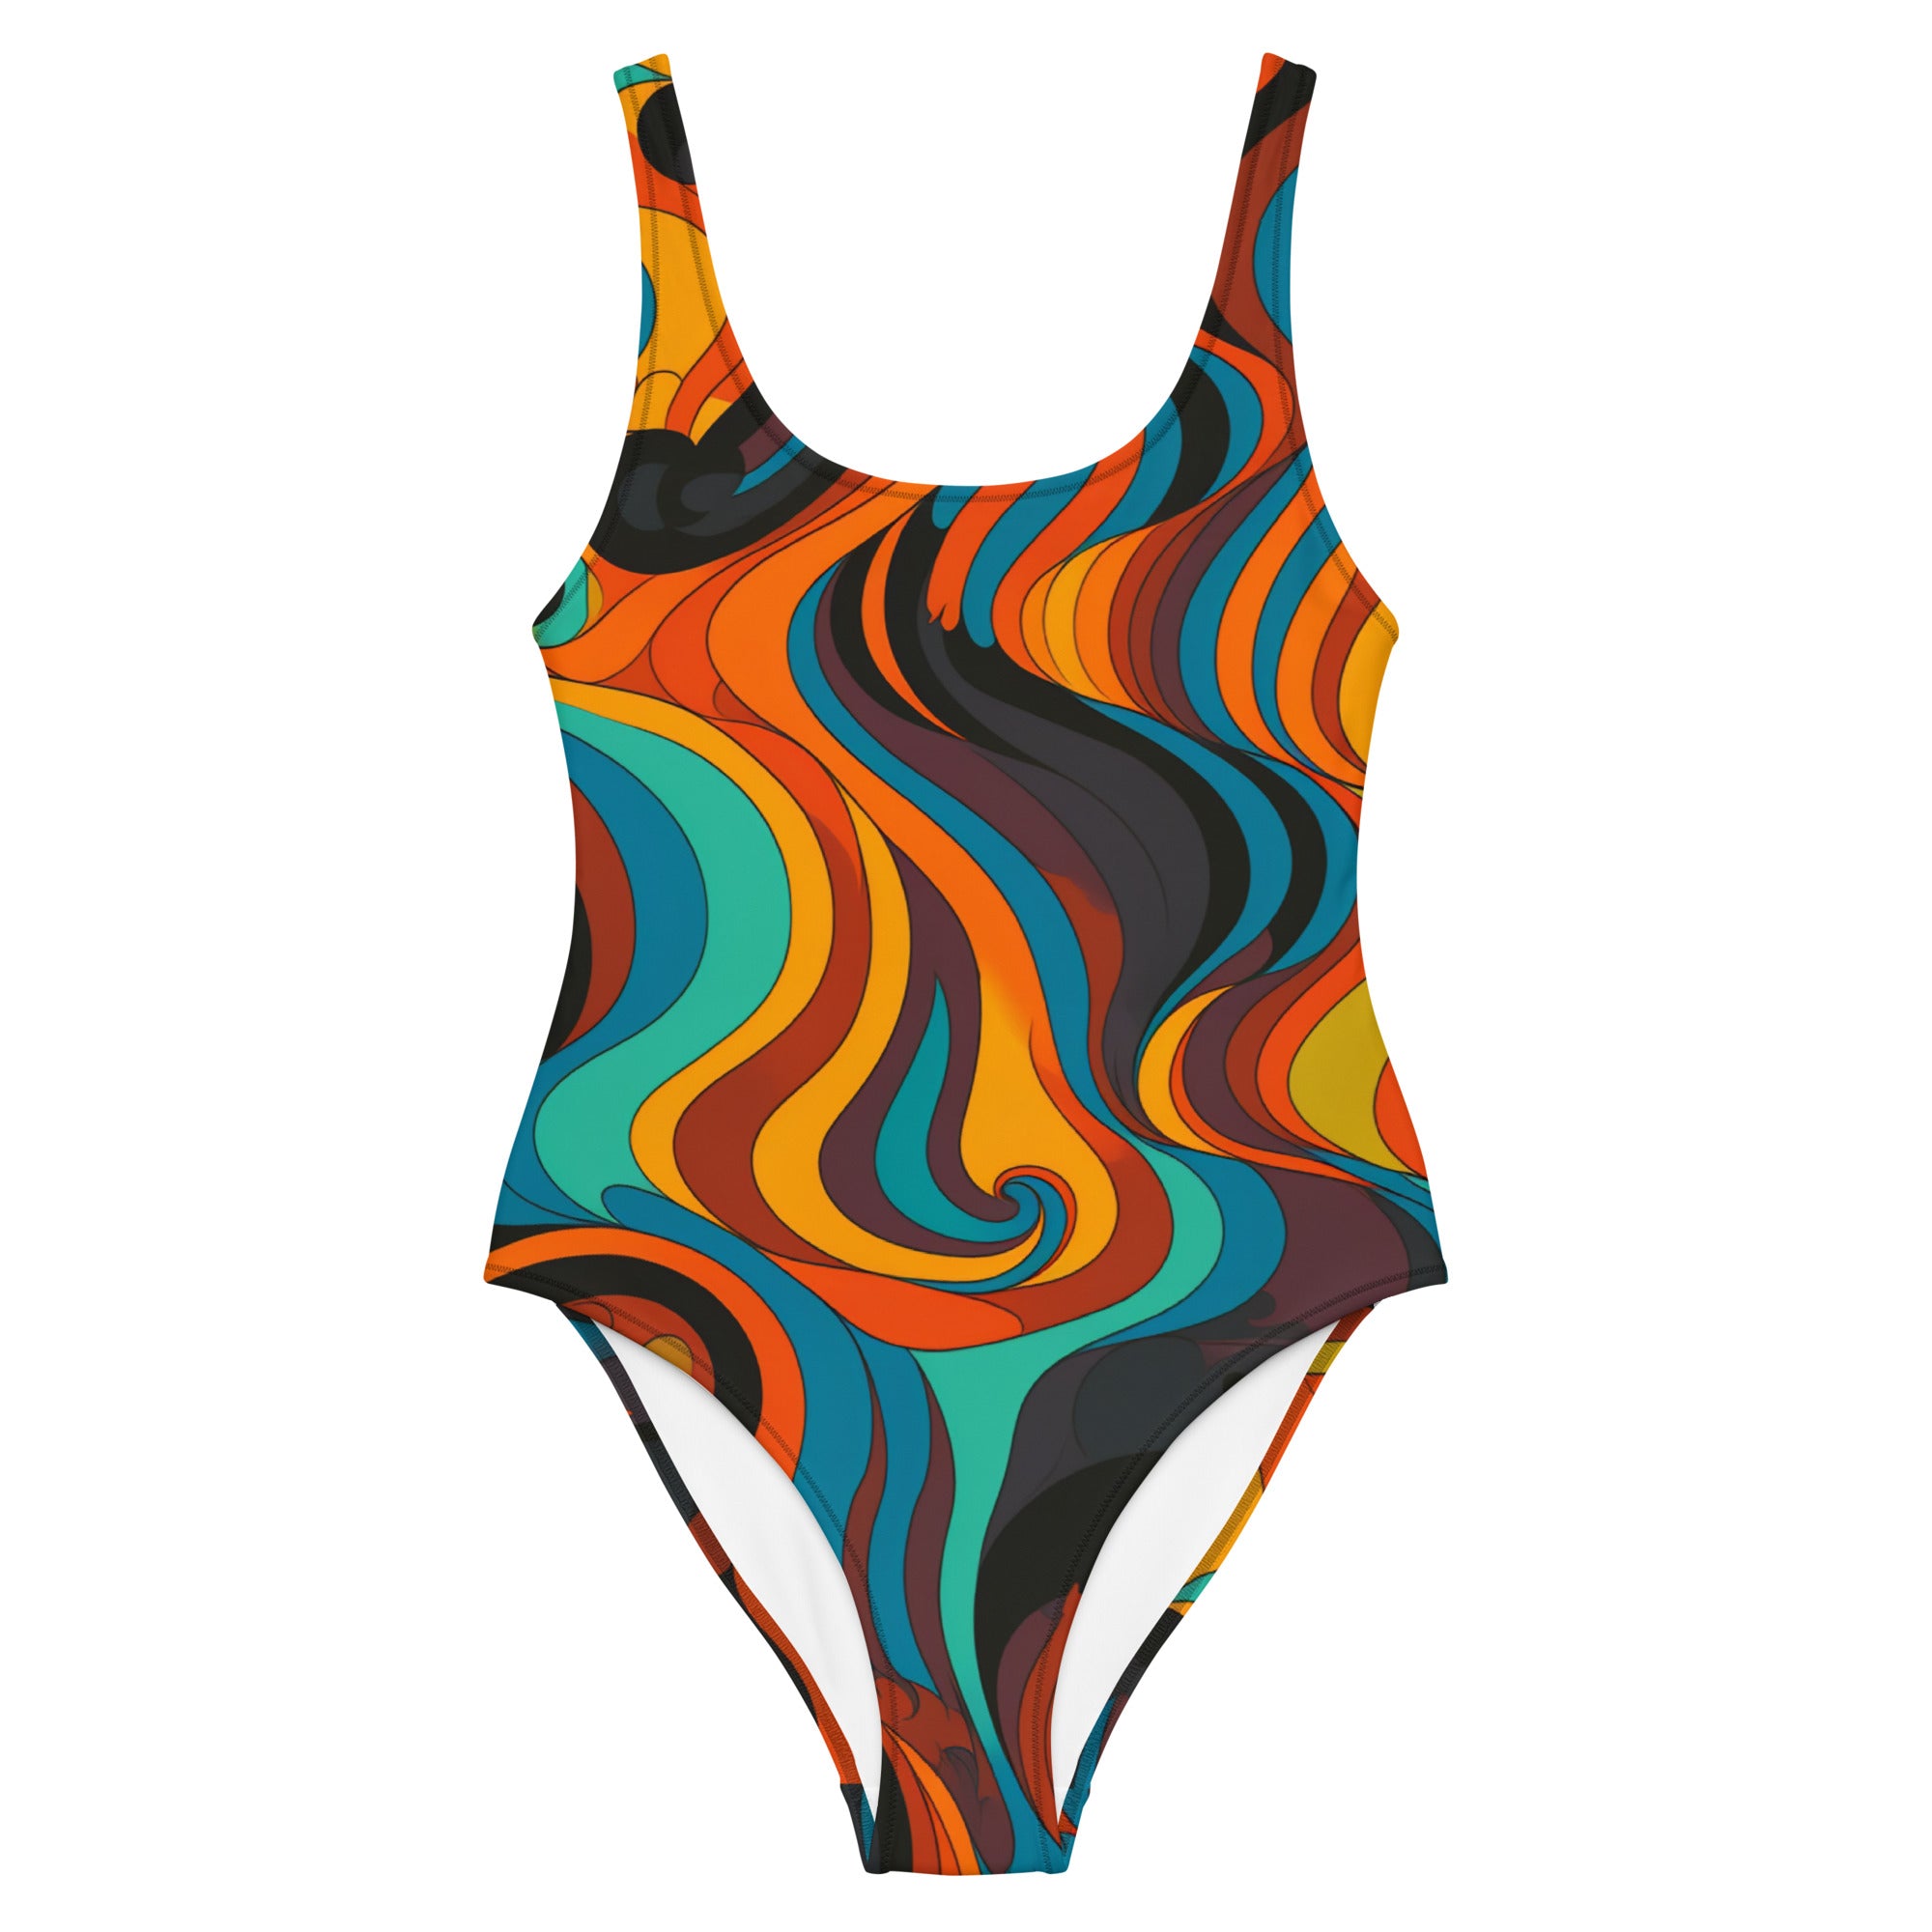 Sidetrip 1968 One-Piece Swimsuit